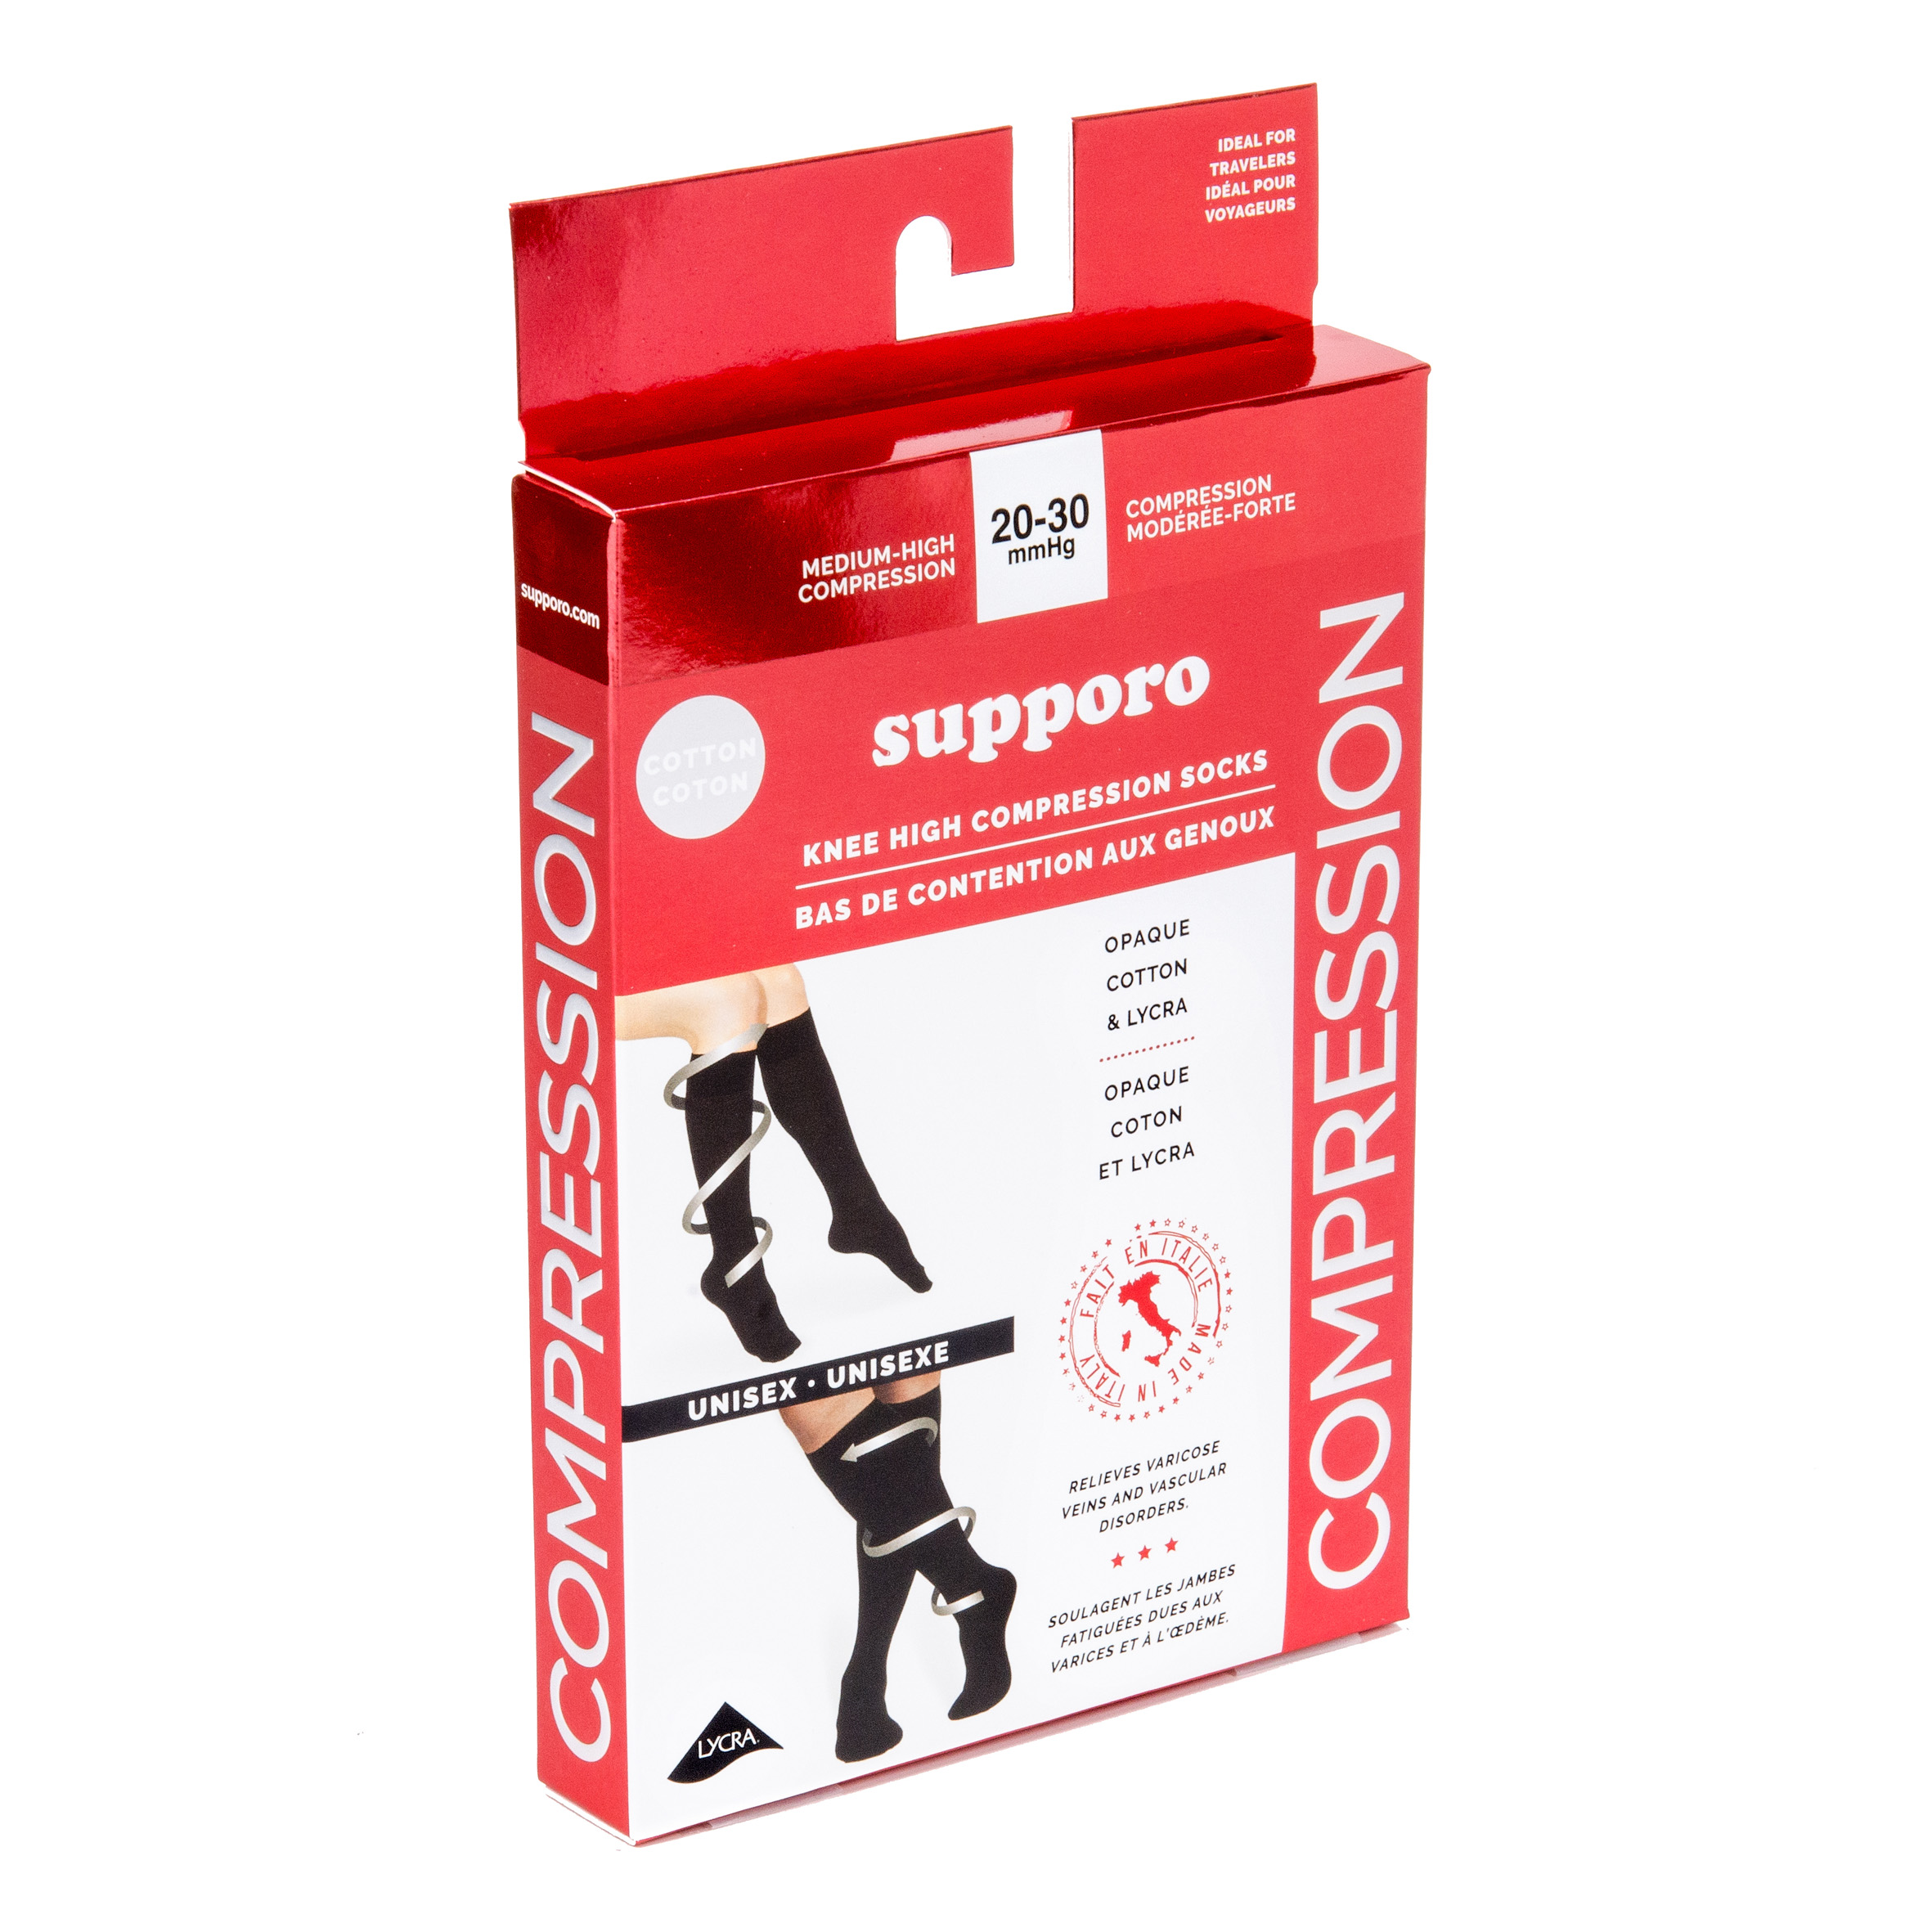 Supporo Cotton Knee-high Compression Socks, 20-30 mmHg